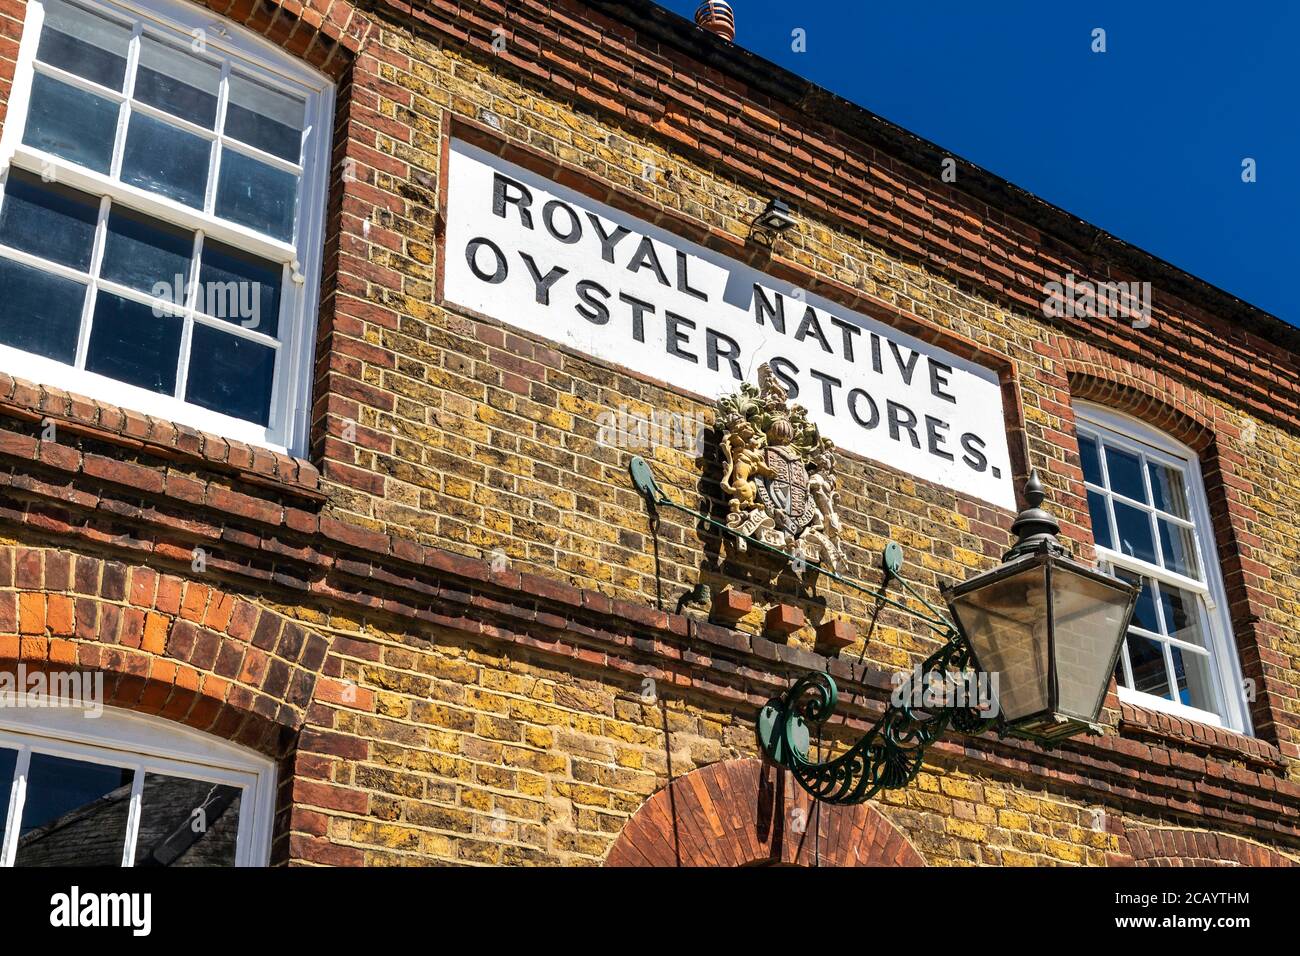 Royal Native Oyster Stores Gebäude in Whitstable, Kent, Großbritannien Stockfoto